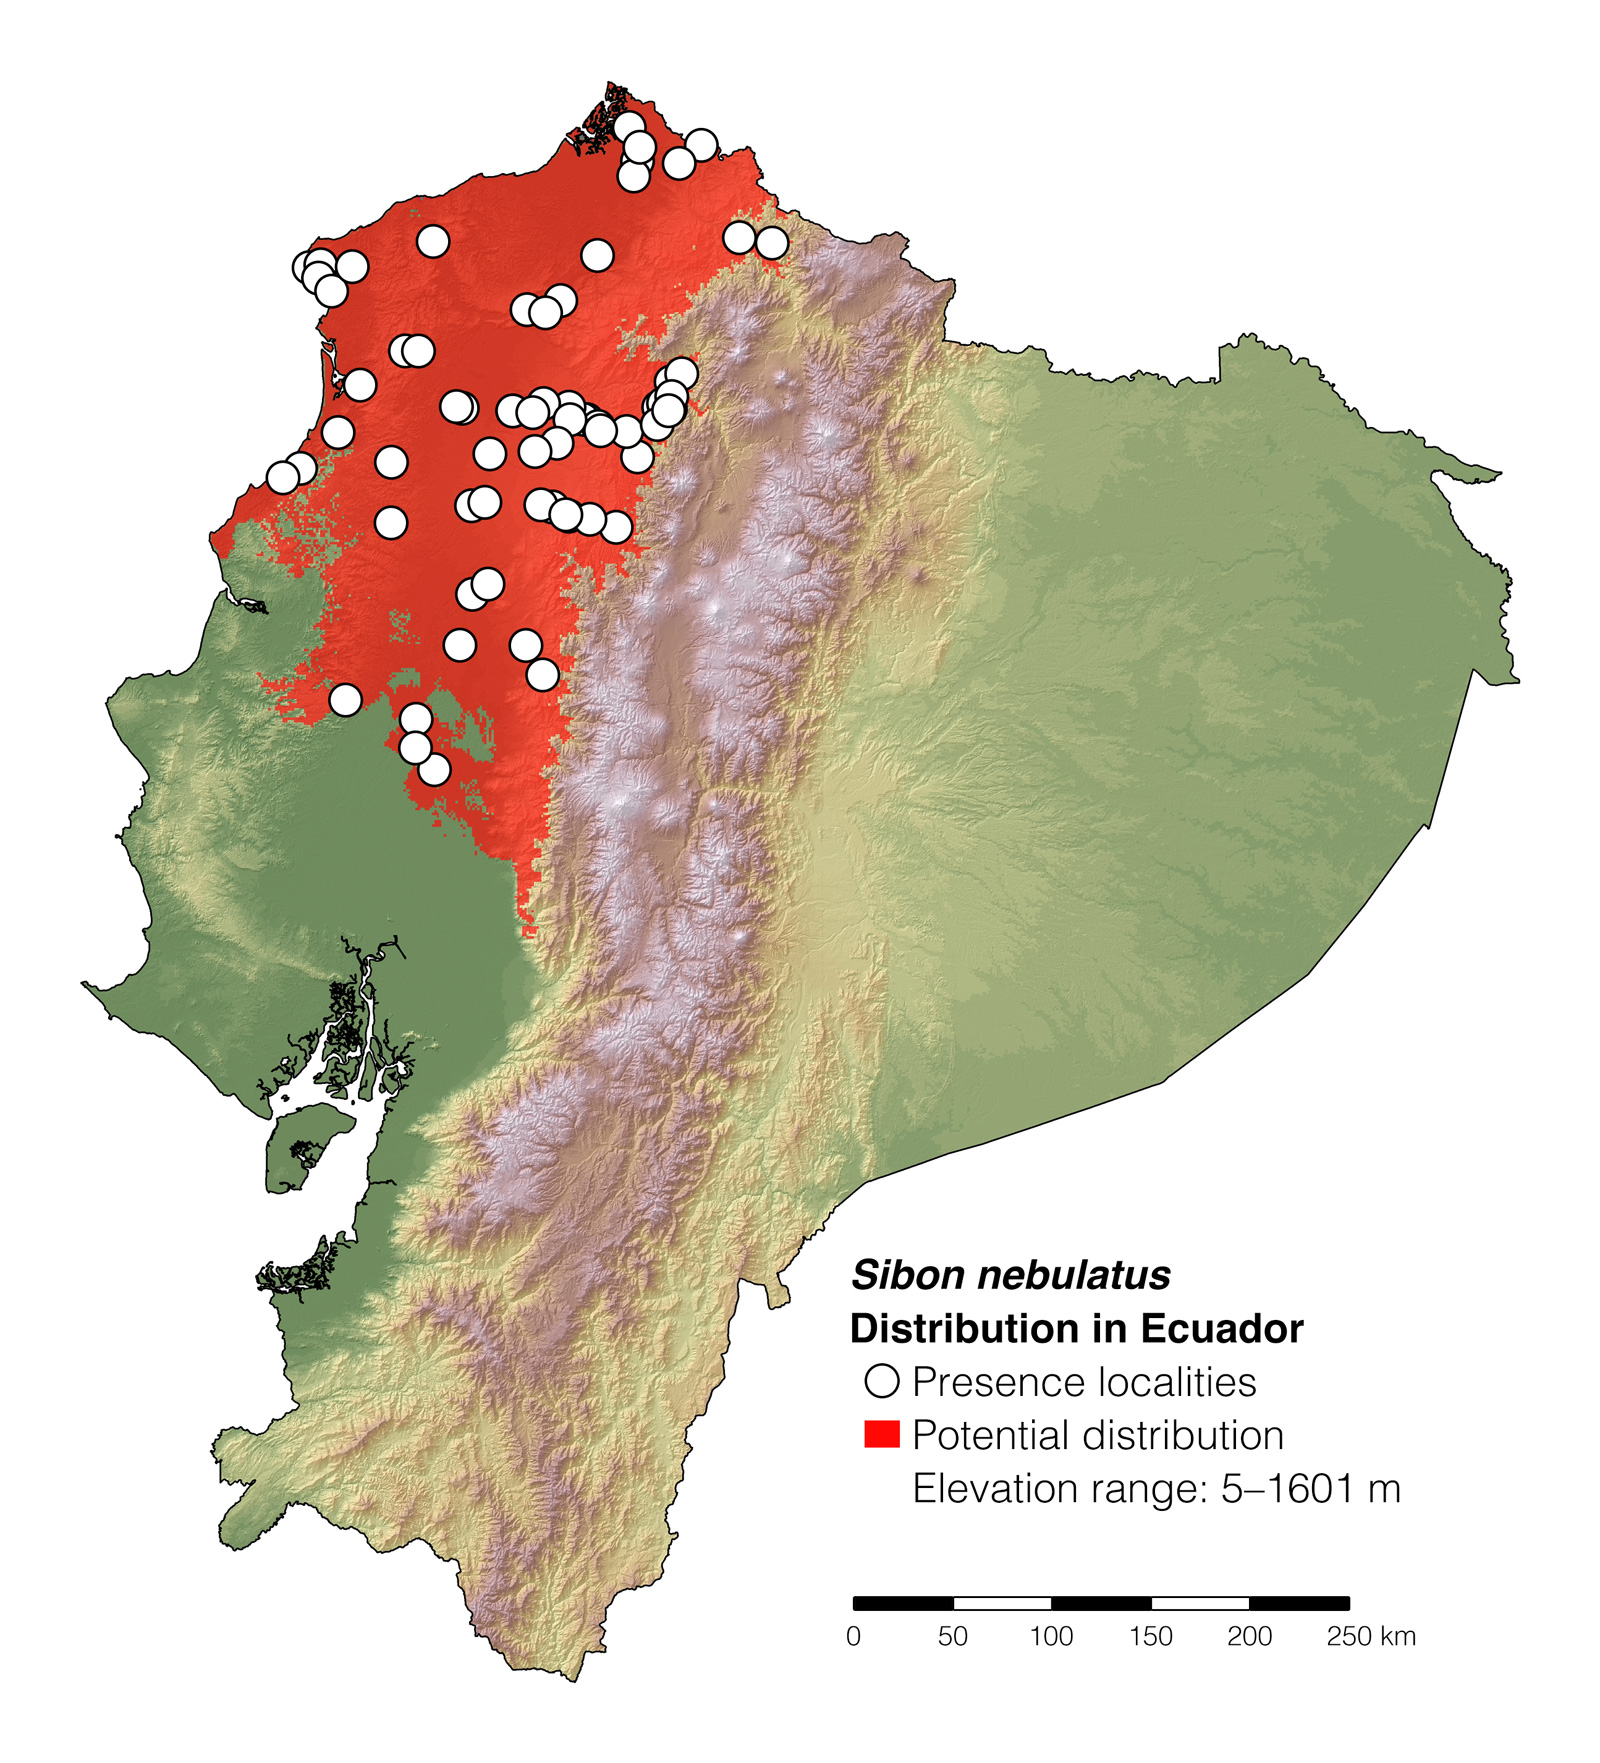 Distribution of Sibon nebulatus in Ecuador